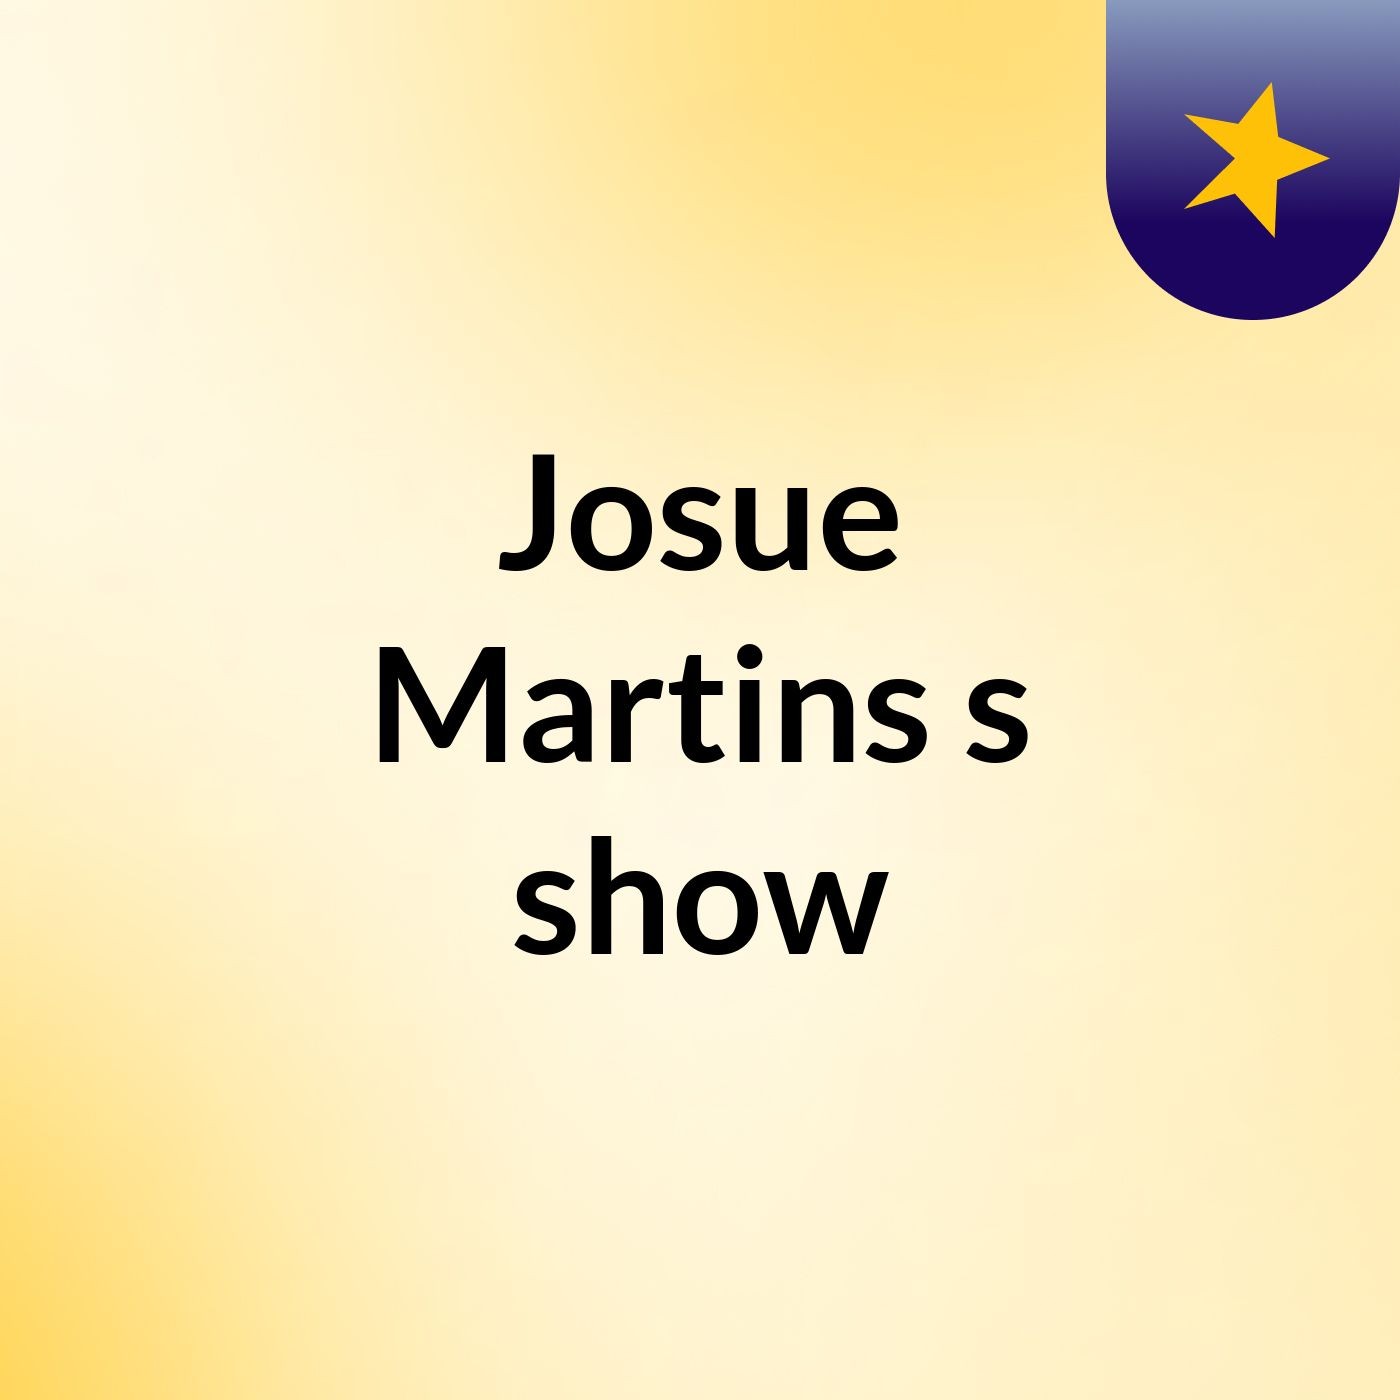 Josue Martins's show